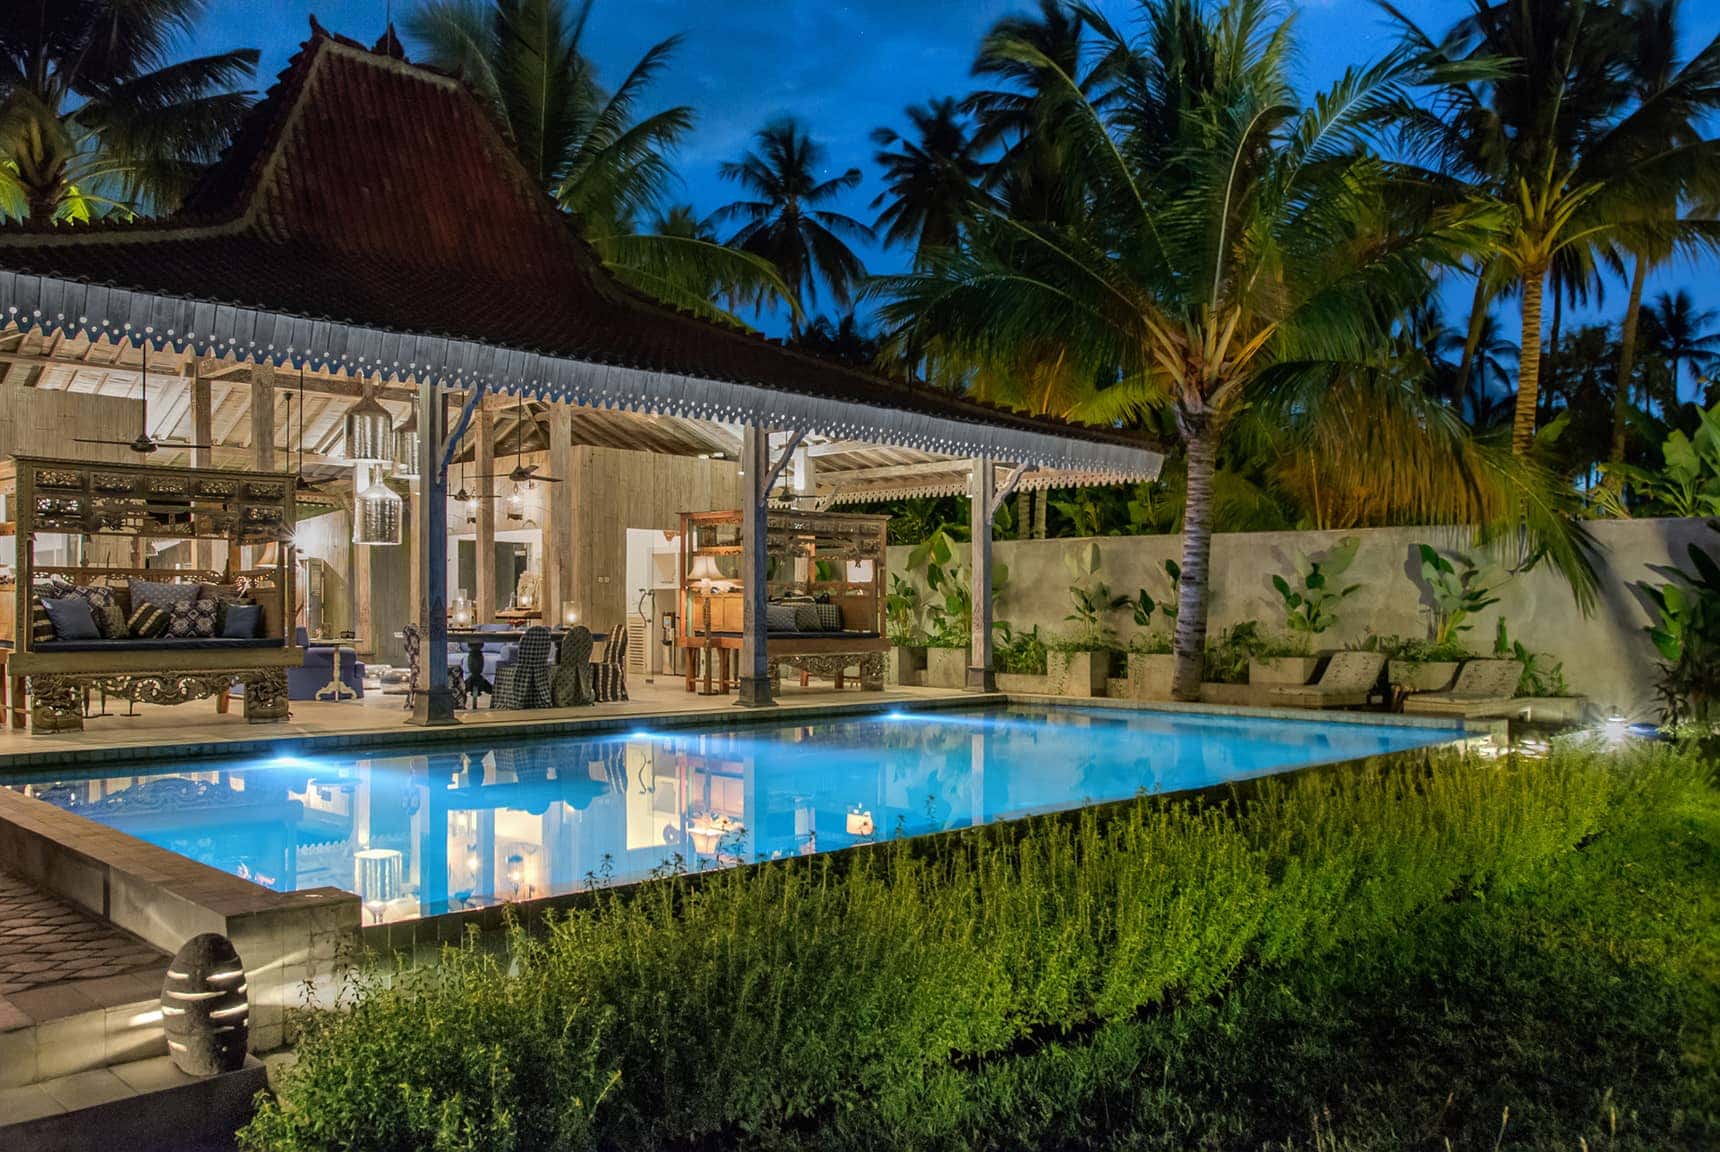 Joglo House - Pantai Sire, Lombok Indonesia (Bali villa photography by master photographer Rick Carmichael of LuxViz)